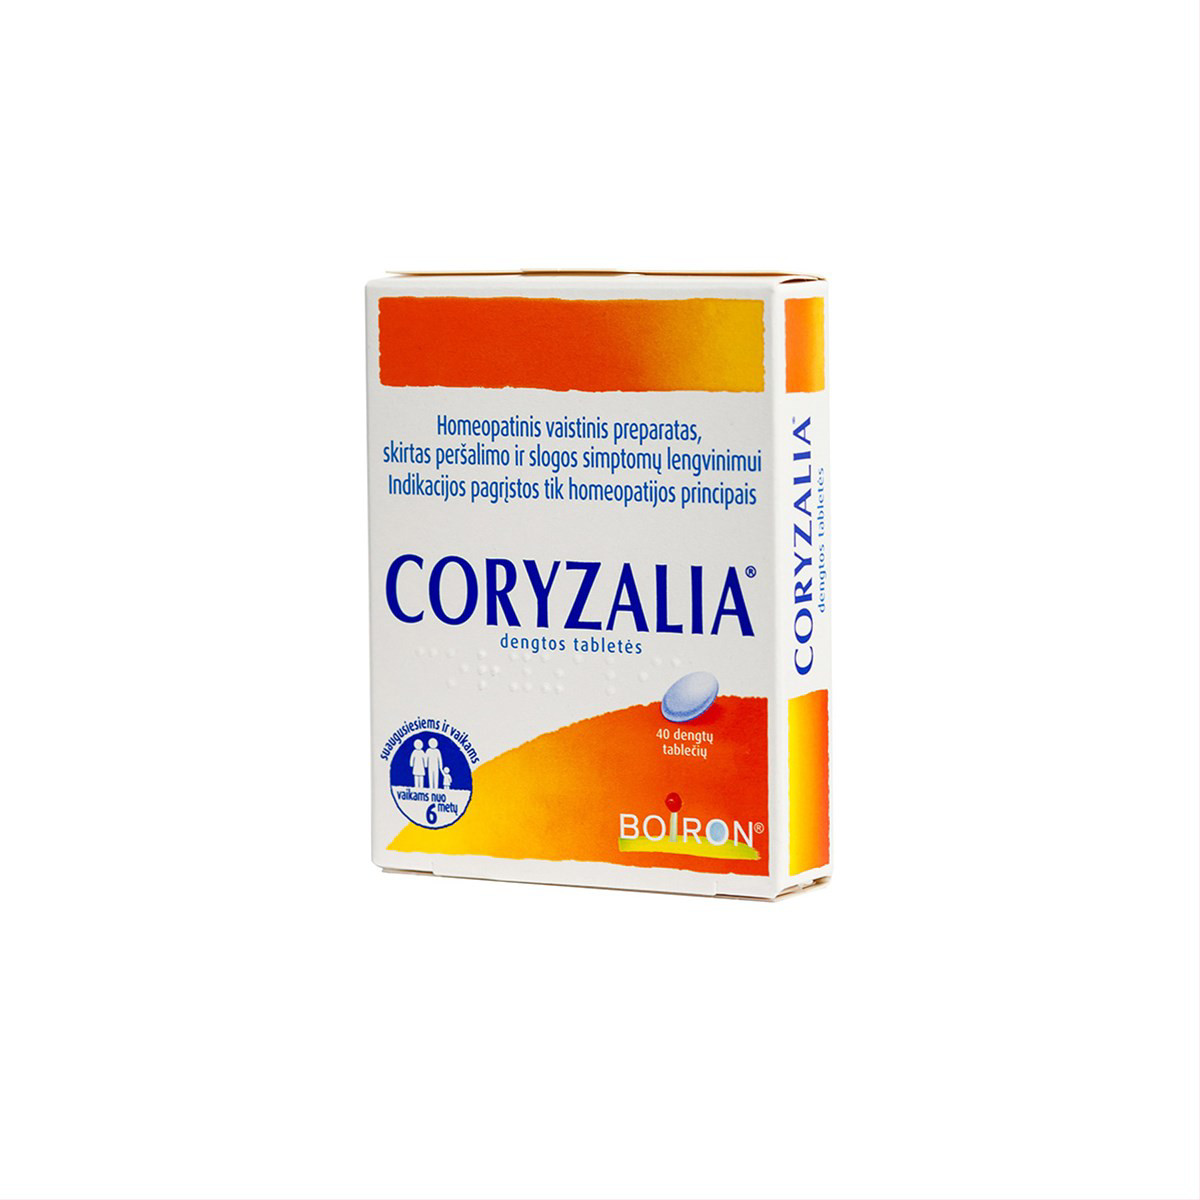 CORYZALIA, dengtos tabletės, N40